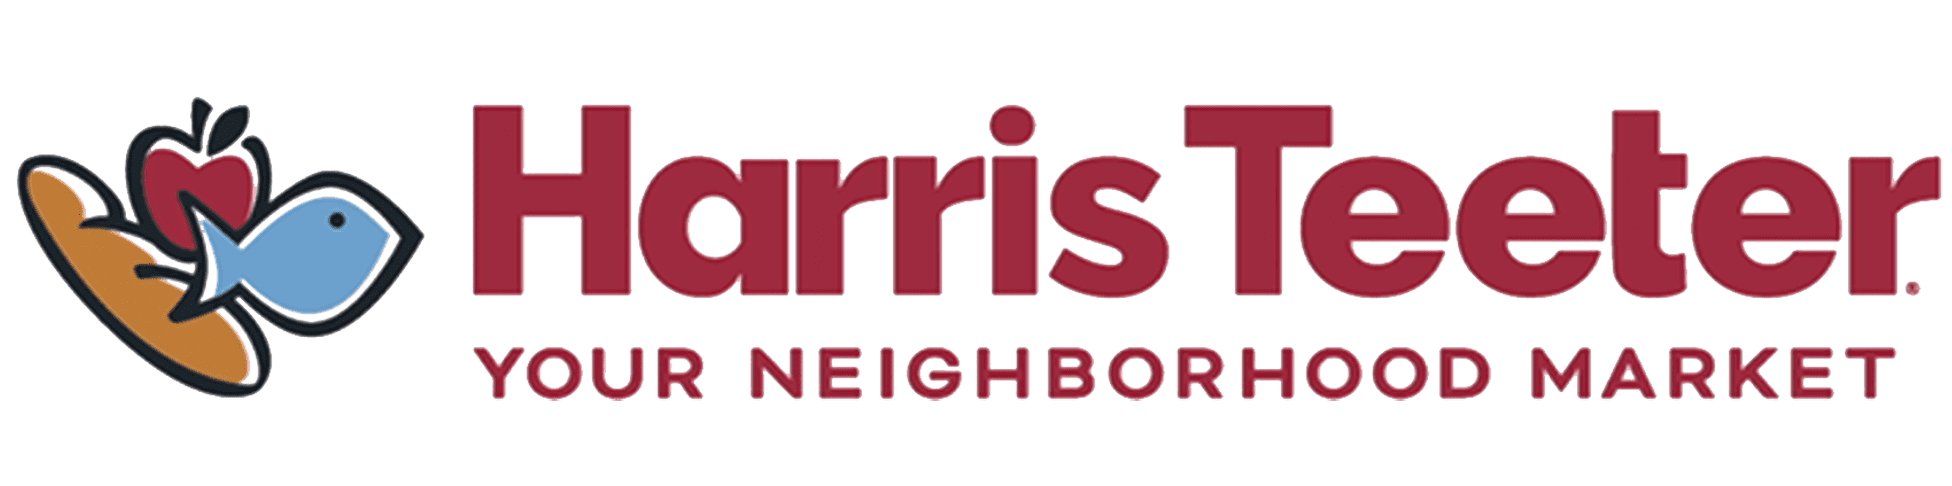 Harris-Teeter-Logo.png